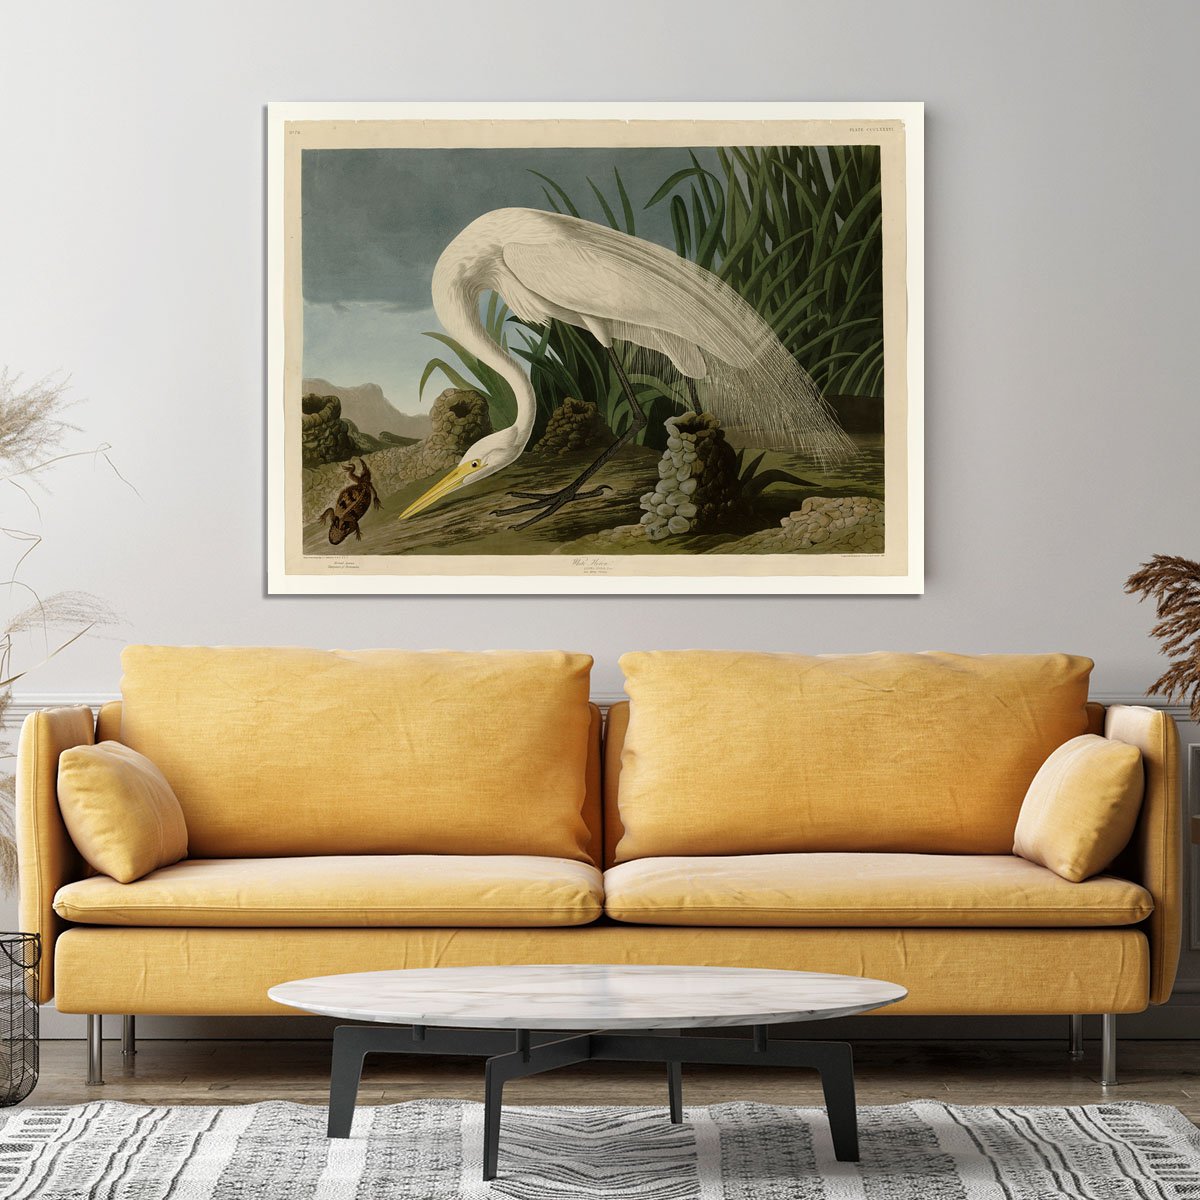 White Heron by Audubon Canvas Print or Poster